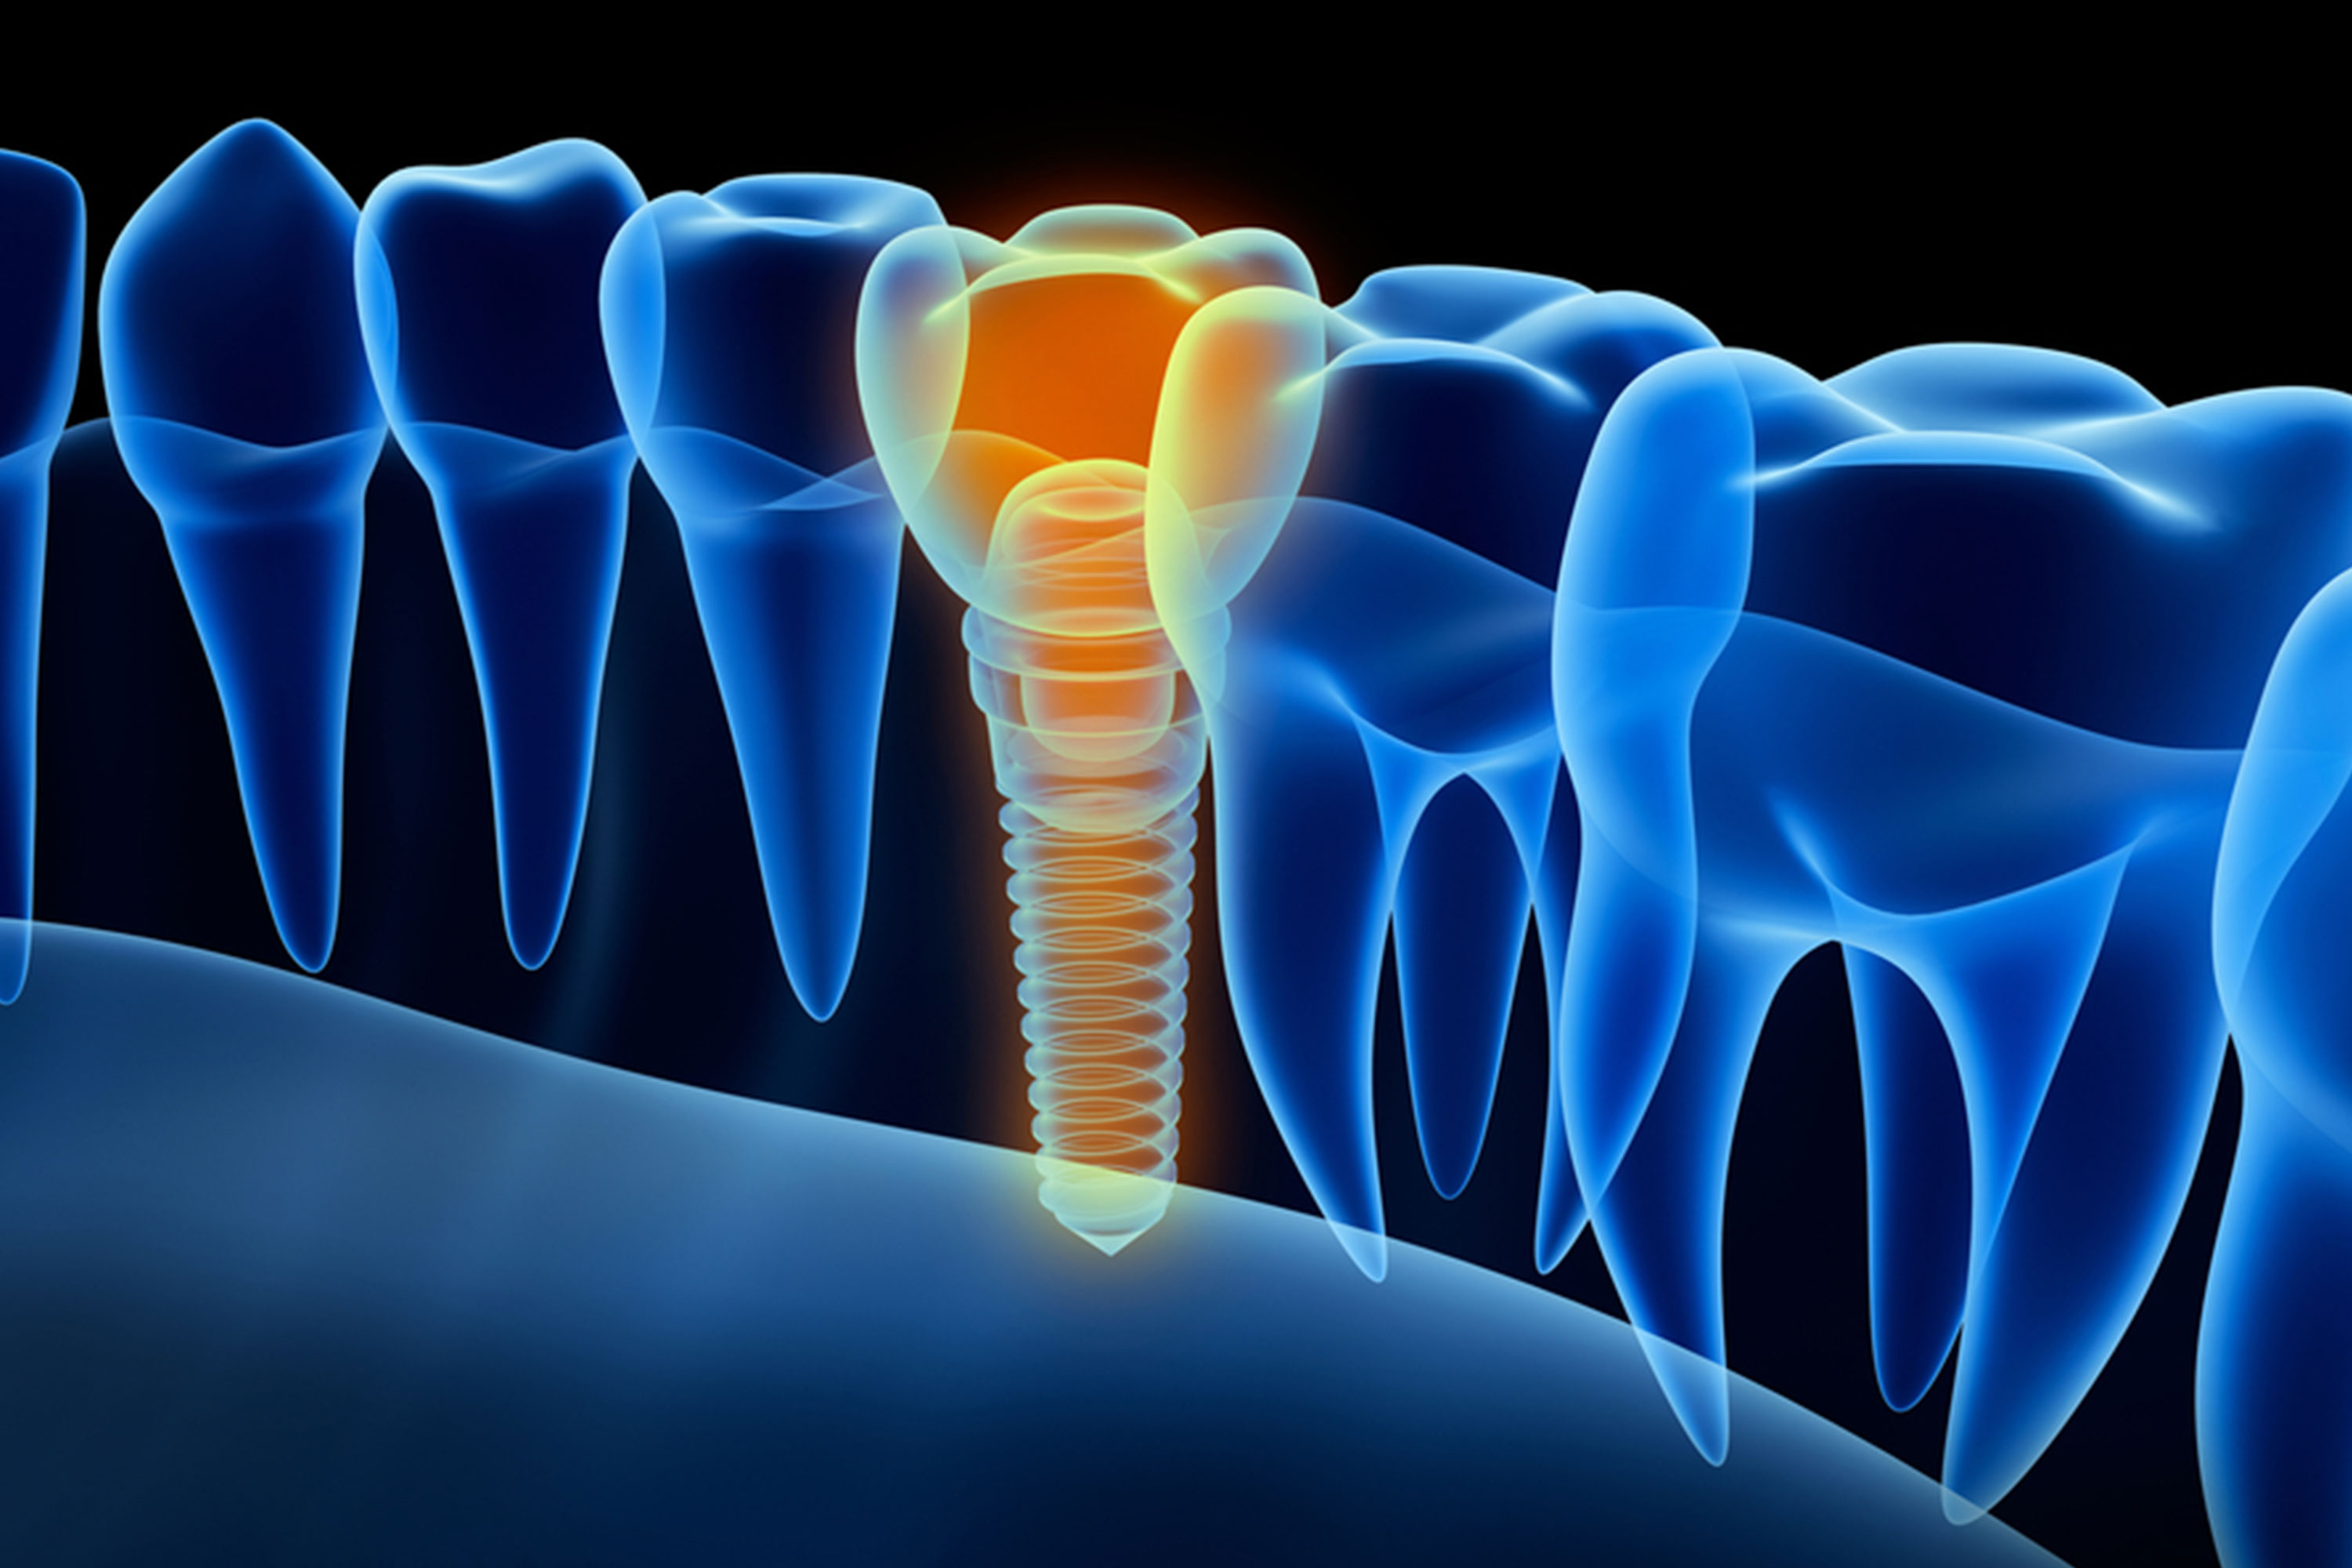 dental implants example